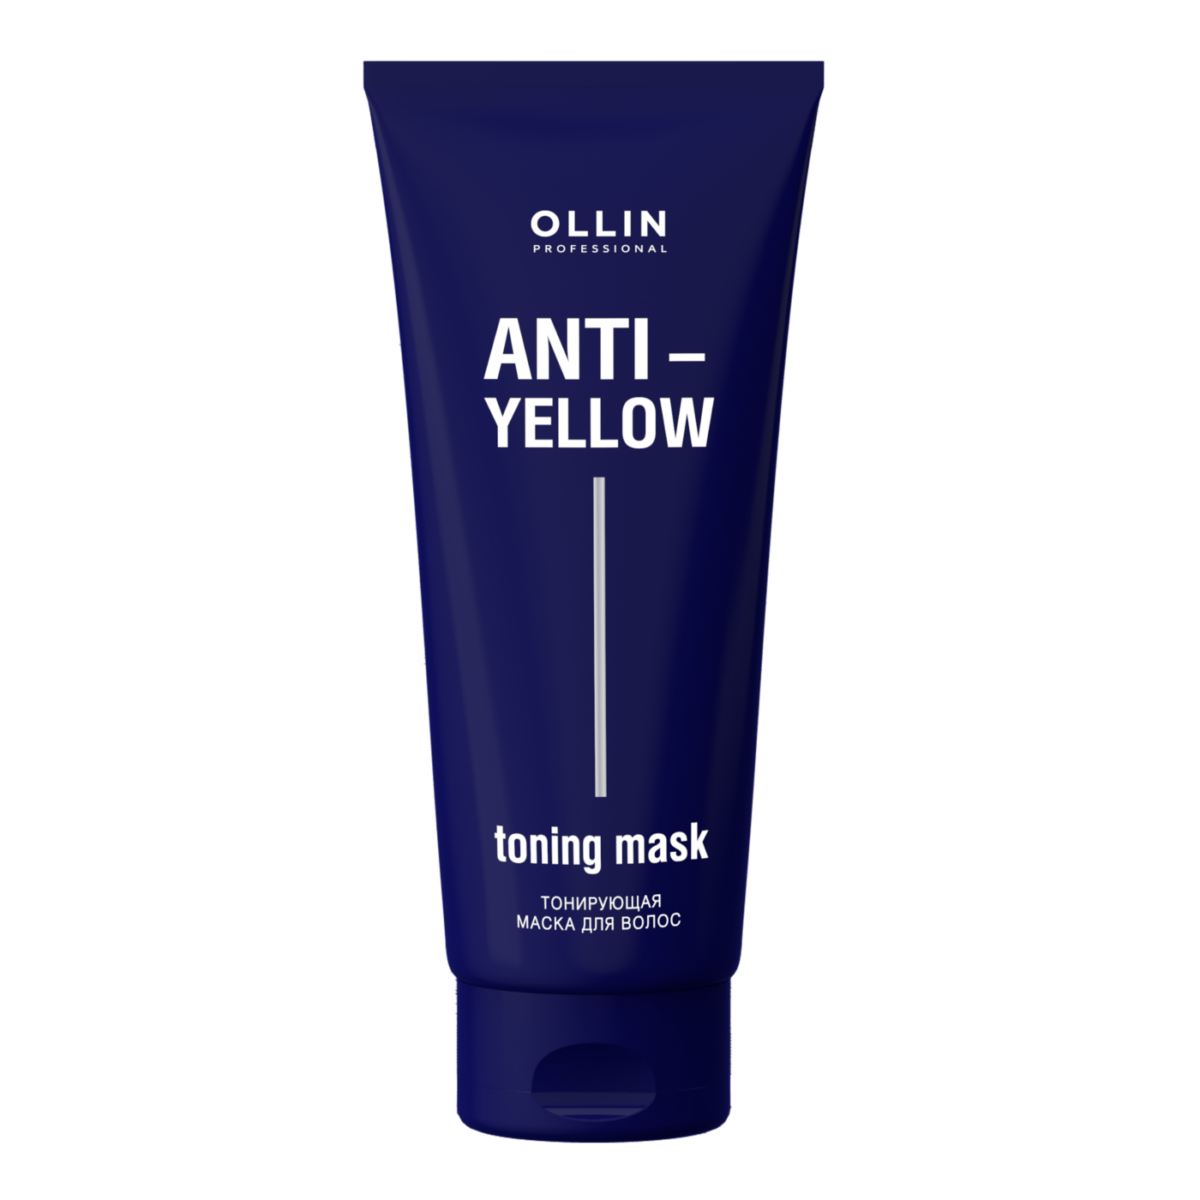 Anti-Yellow Toning Mask Тонирующая маска для волос 250 мл OLLIN 772925